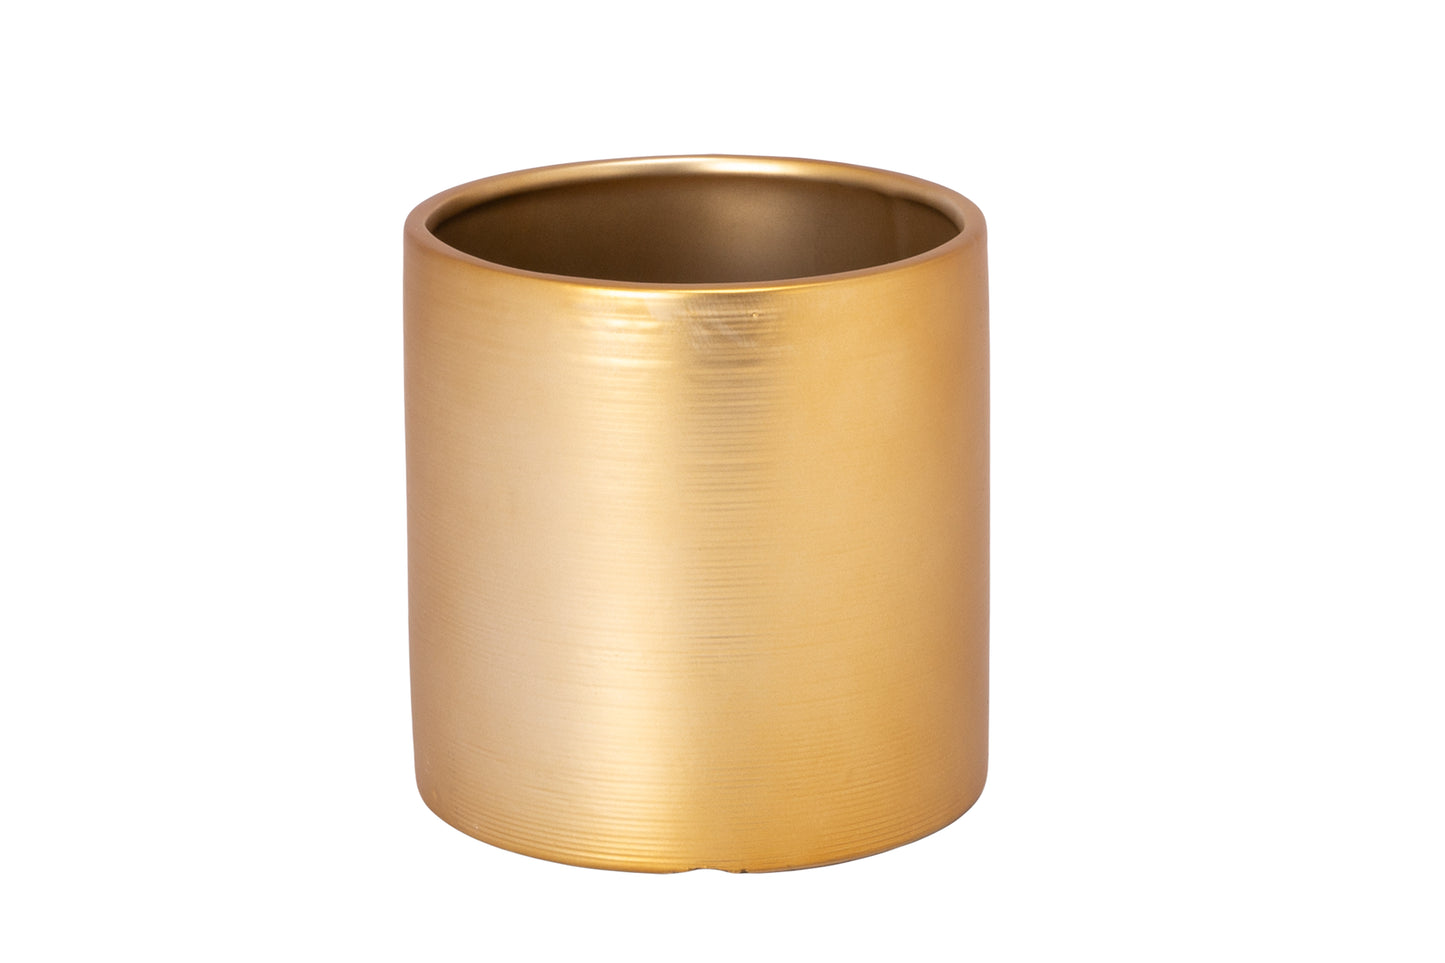 Ceramic Round Pot with Gloss Finish Gold